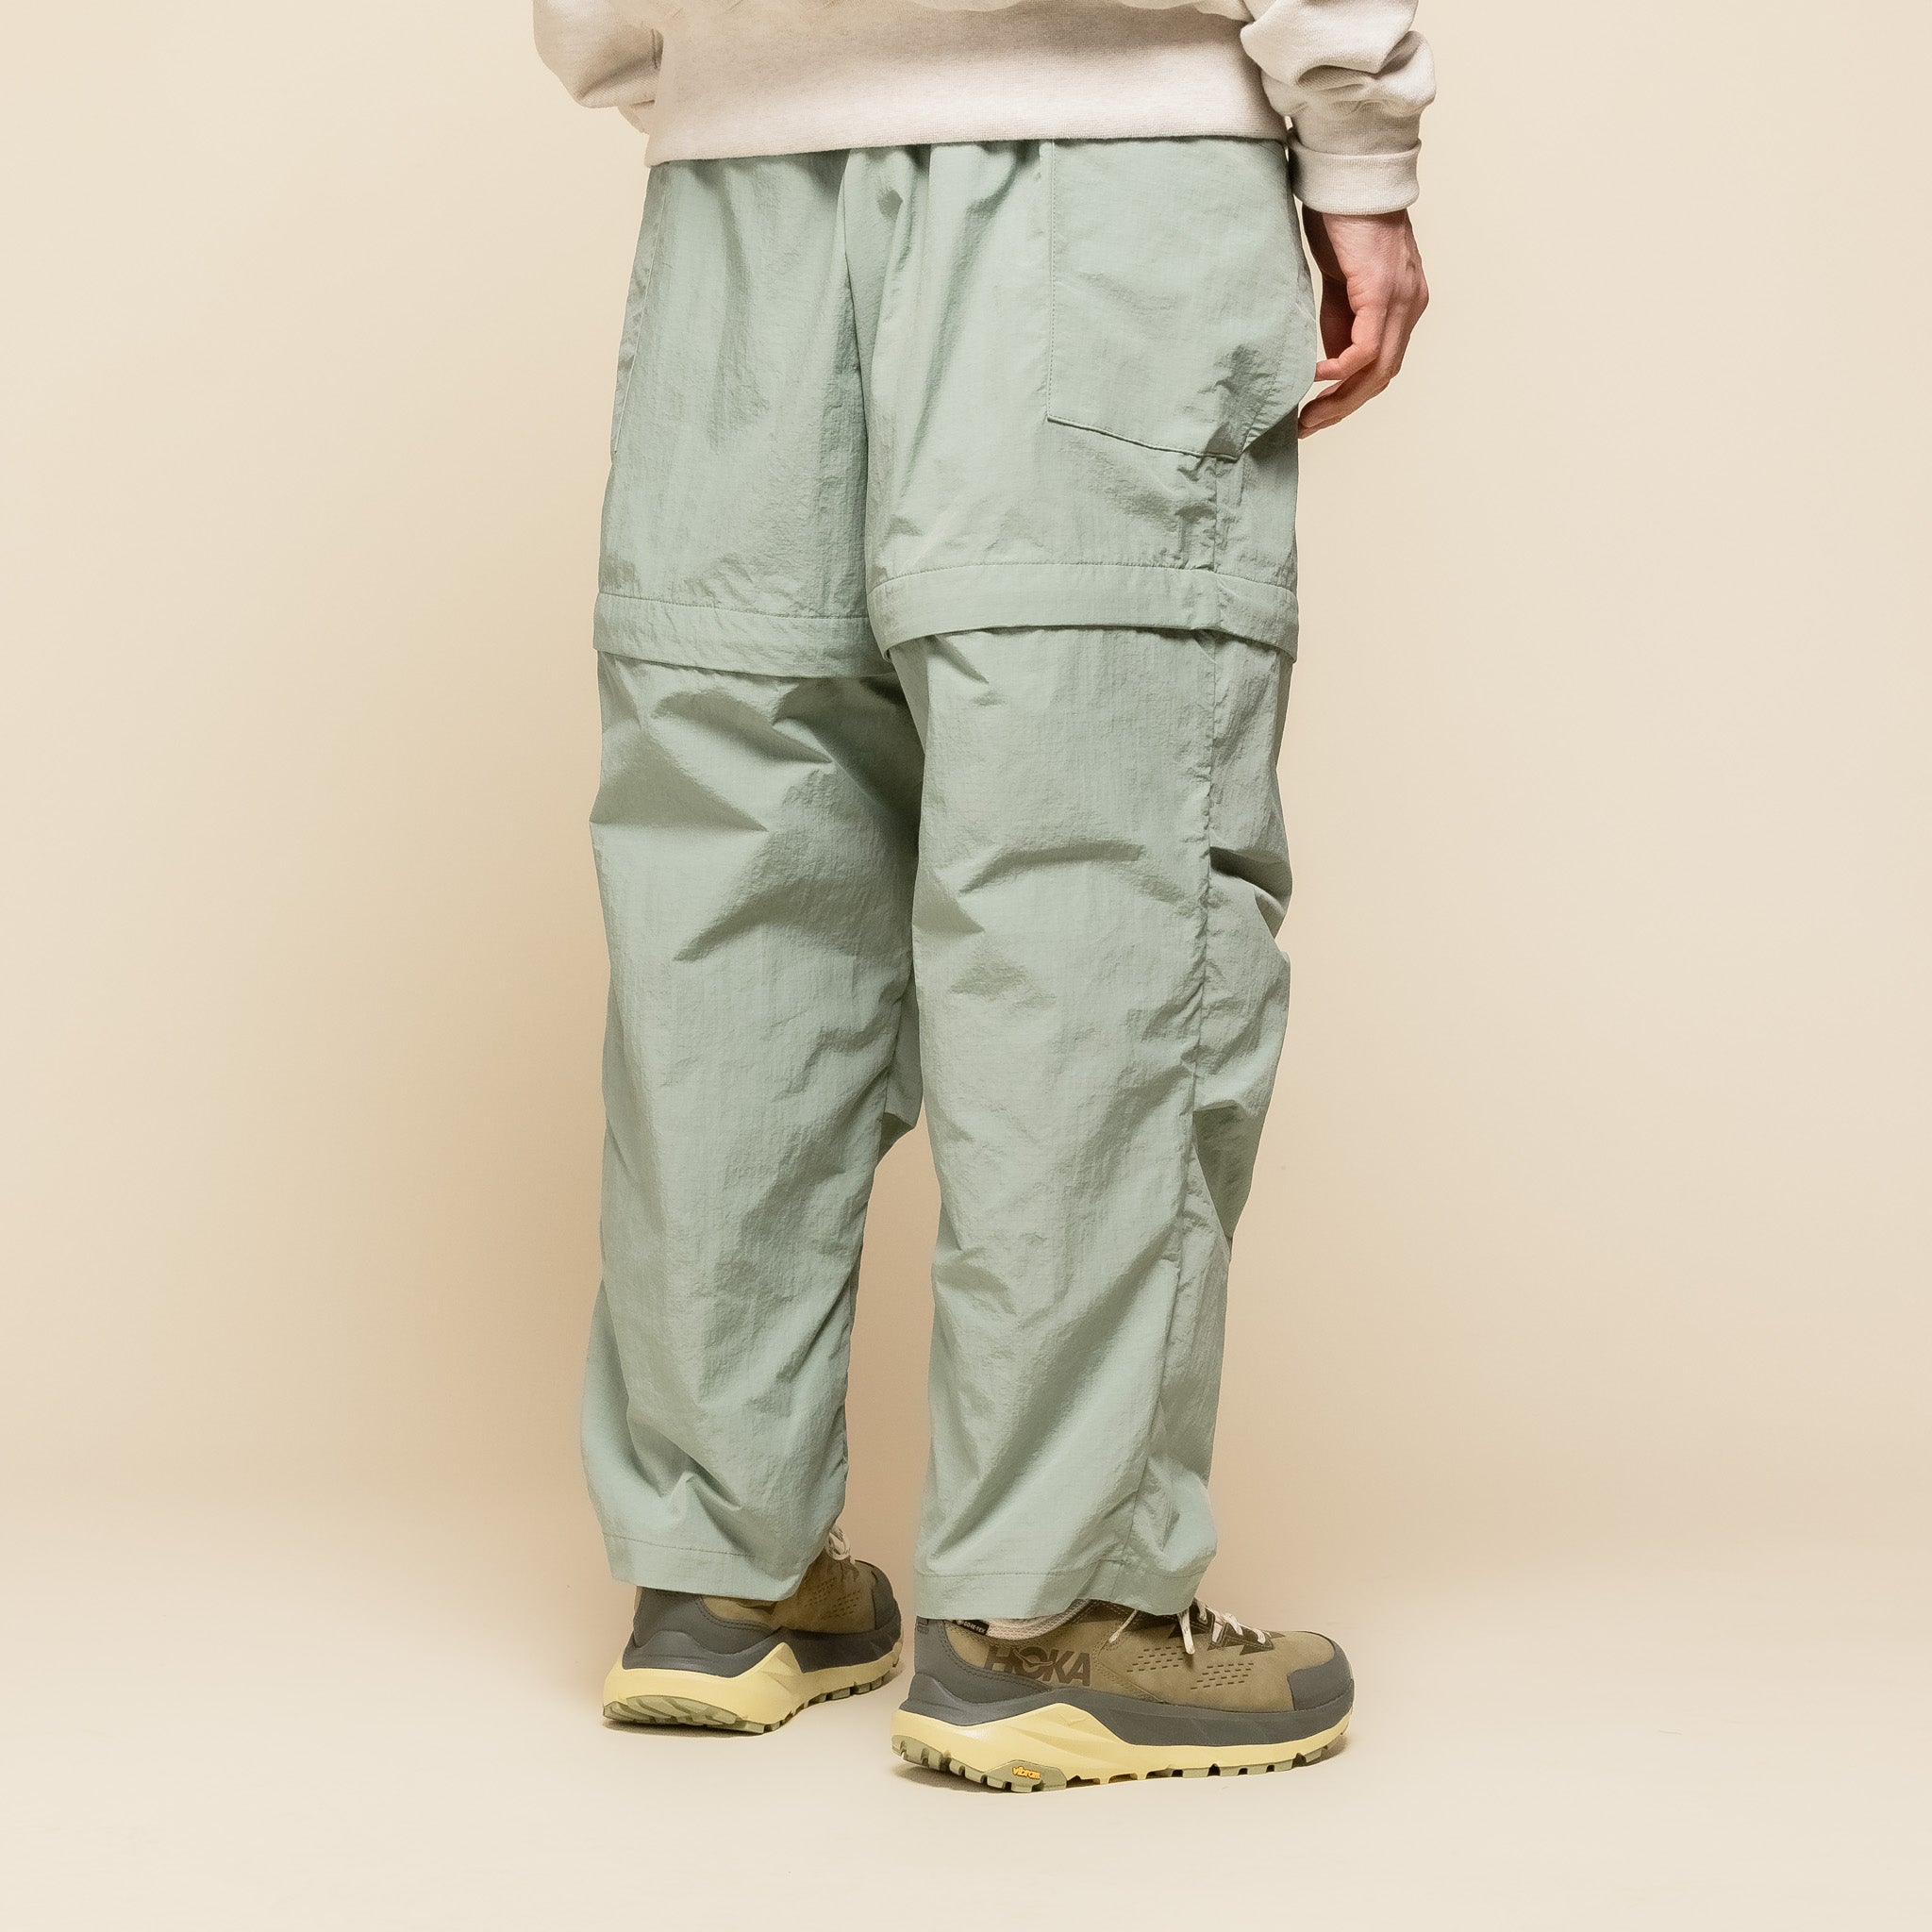 CMF Comfy Outdoor Garment - M65 Detachable "2 Way" Pants - Light Khaki